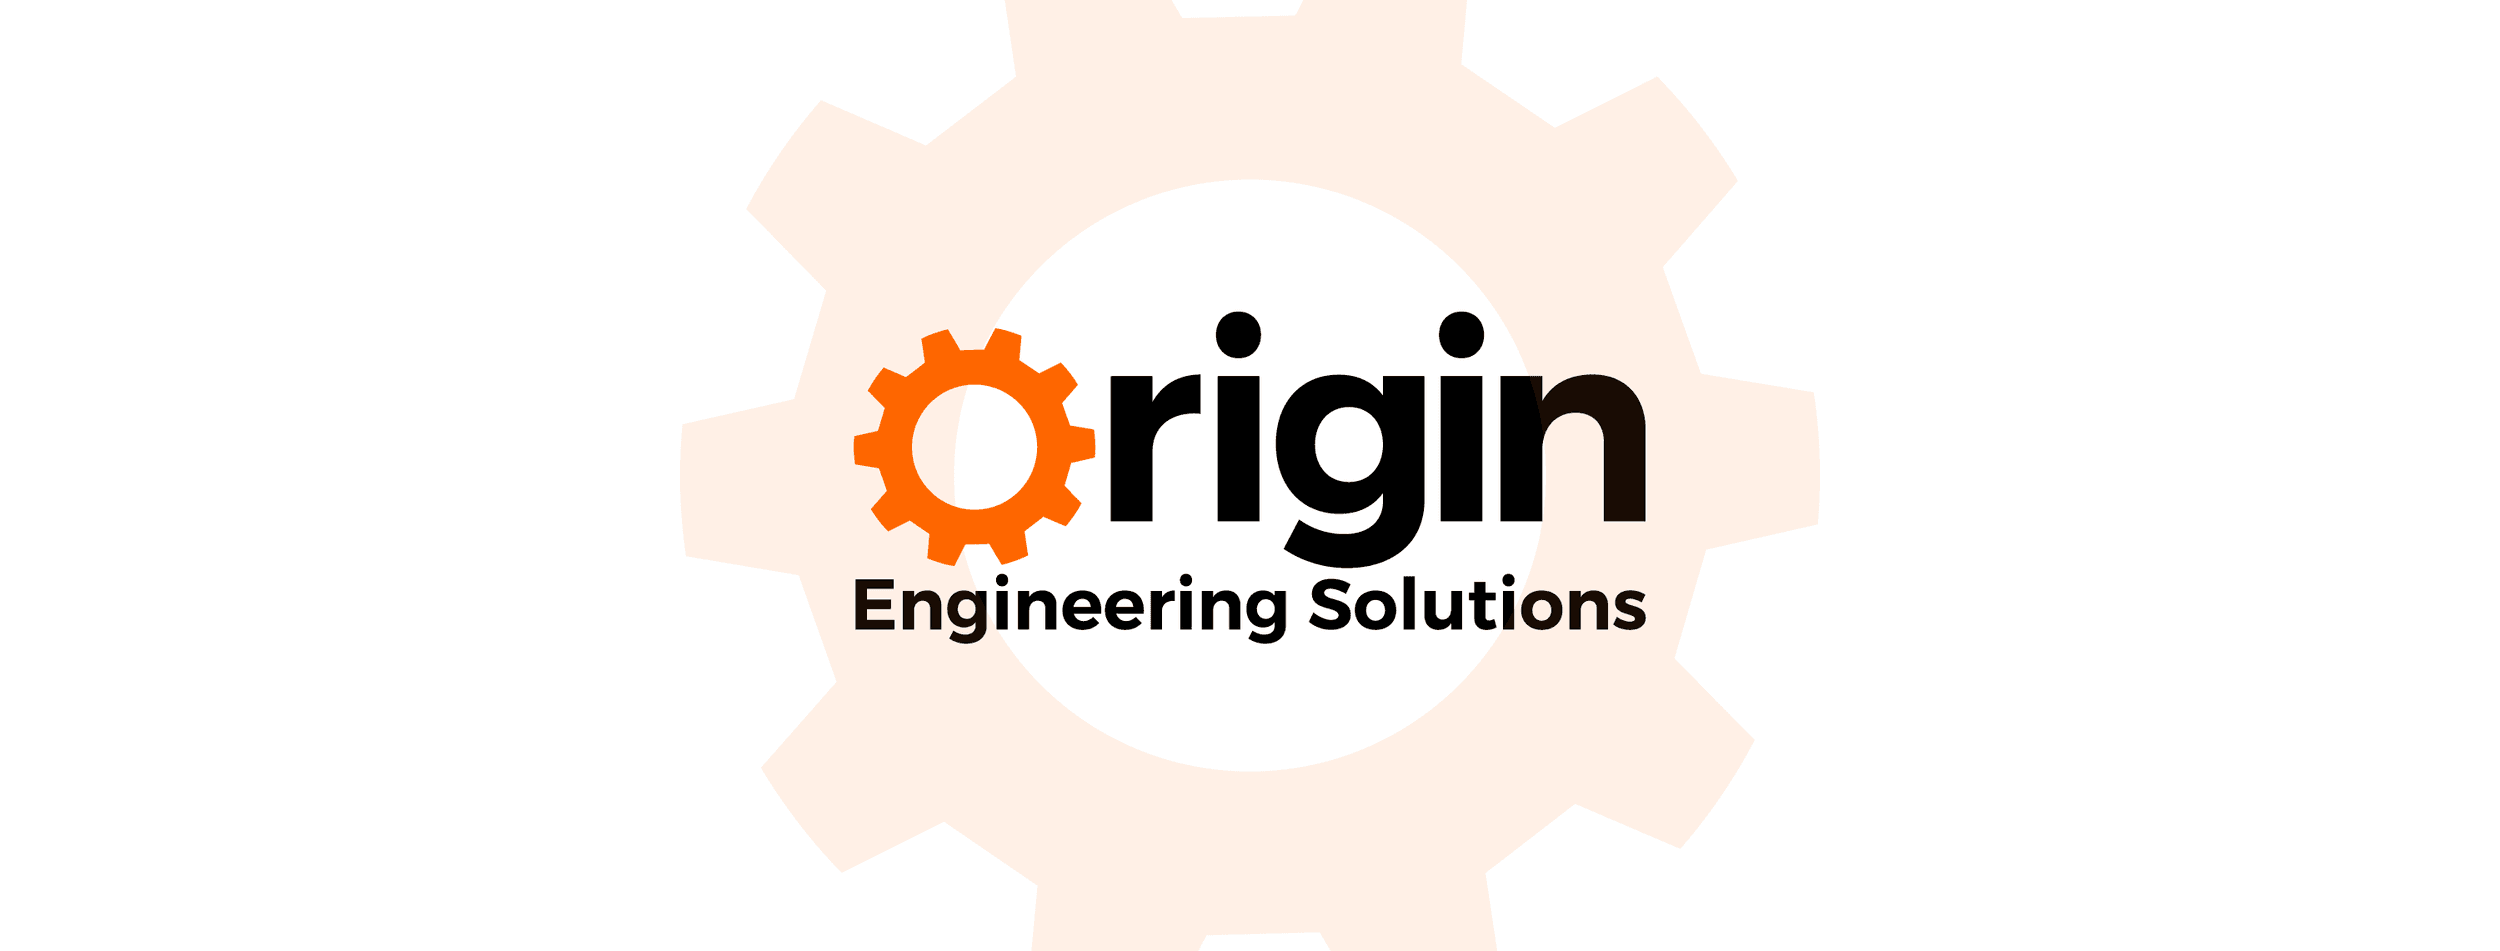 Product Services | Origin Engineering | United Kingdom image